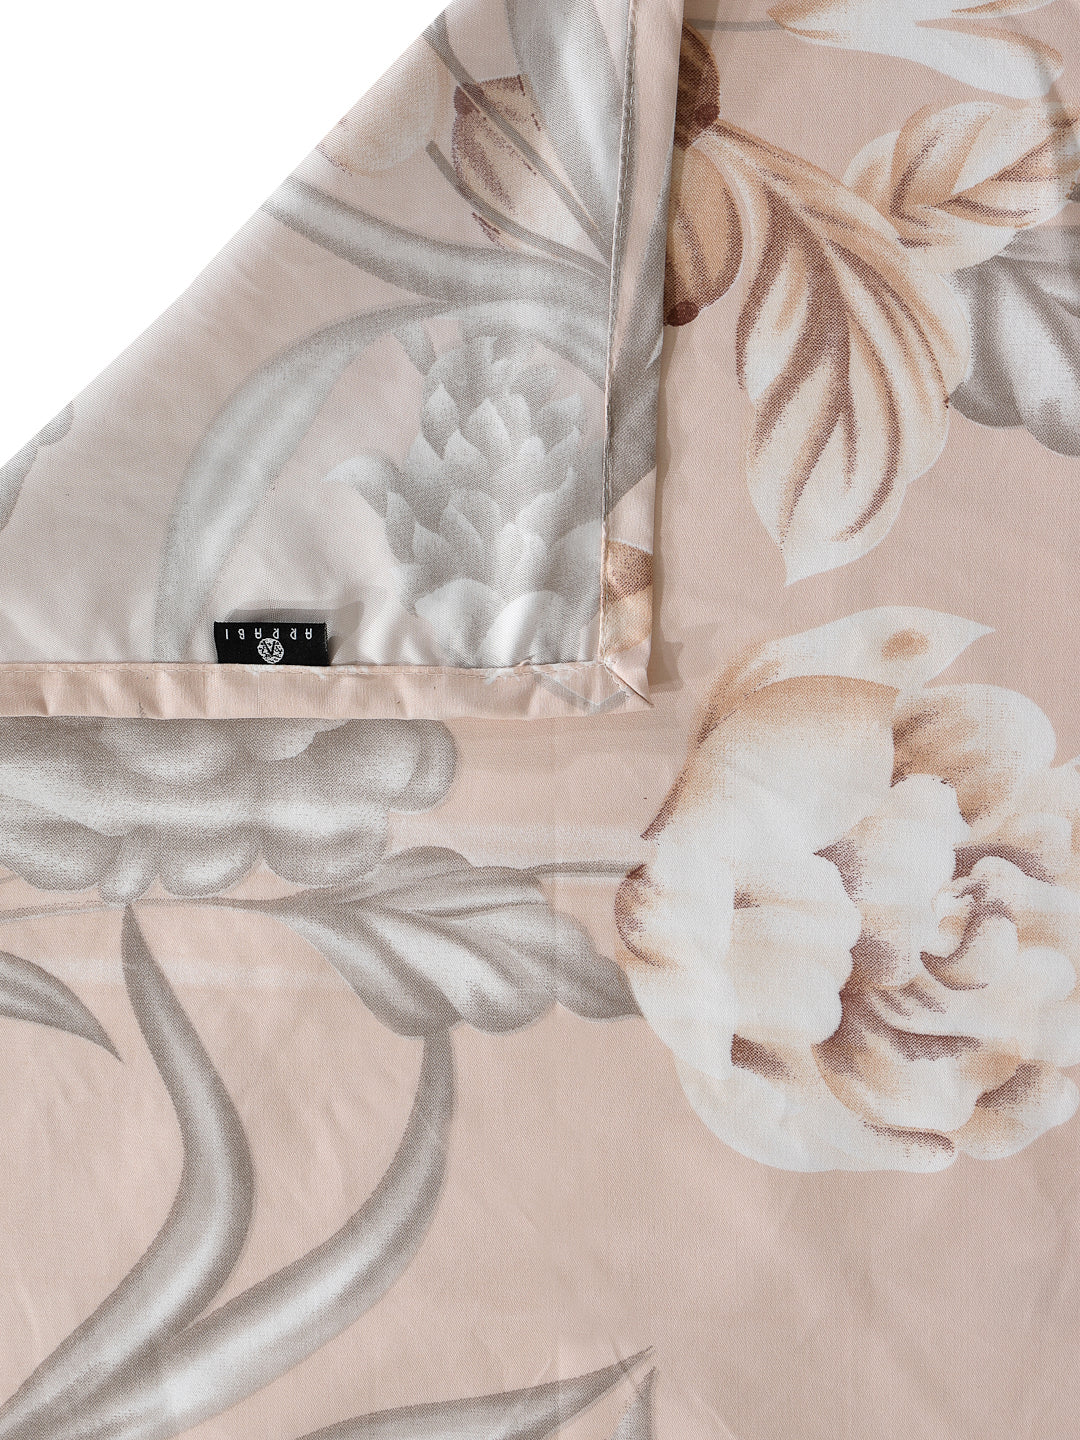 Arrabi Beige Floral TC Cotton Blend King Size Bedsheet with 2 Pillow Covers (250 x 215 cm)